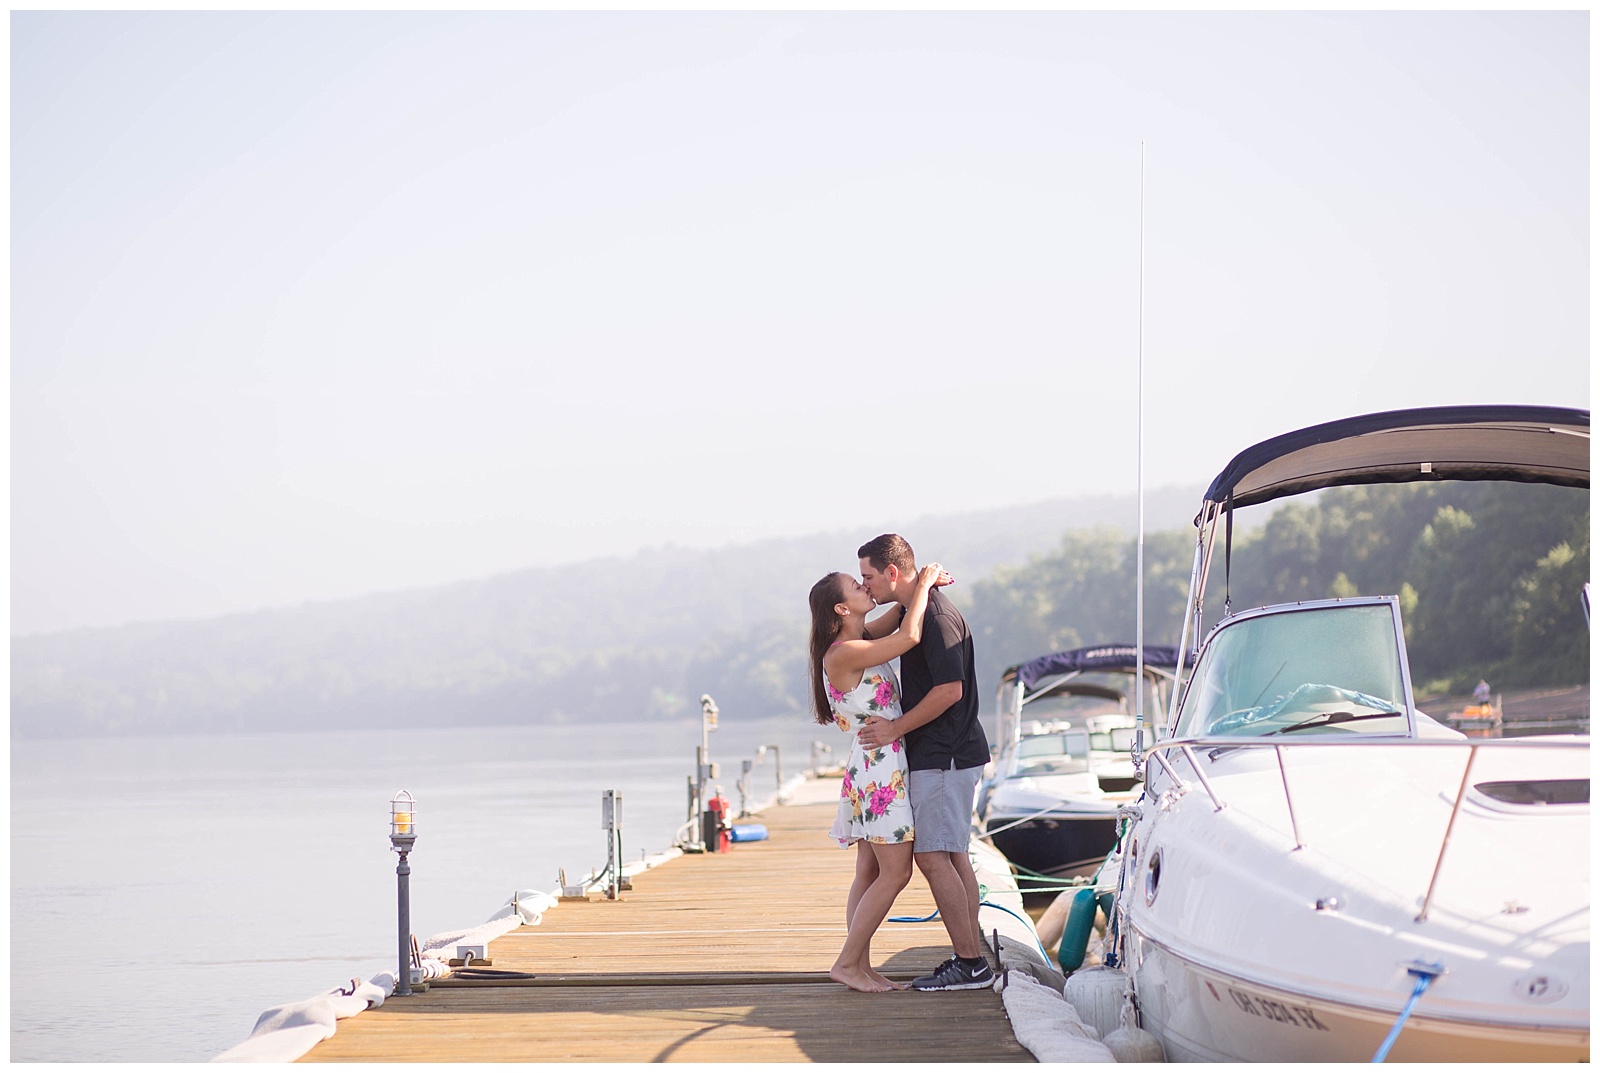 Boat Engagement Session | Cincinnati, Ohio | Monica Brown Photography | monicabrownphoto.com